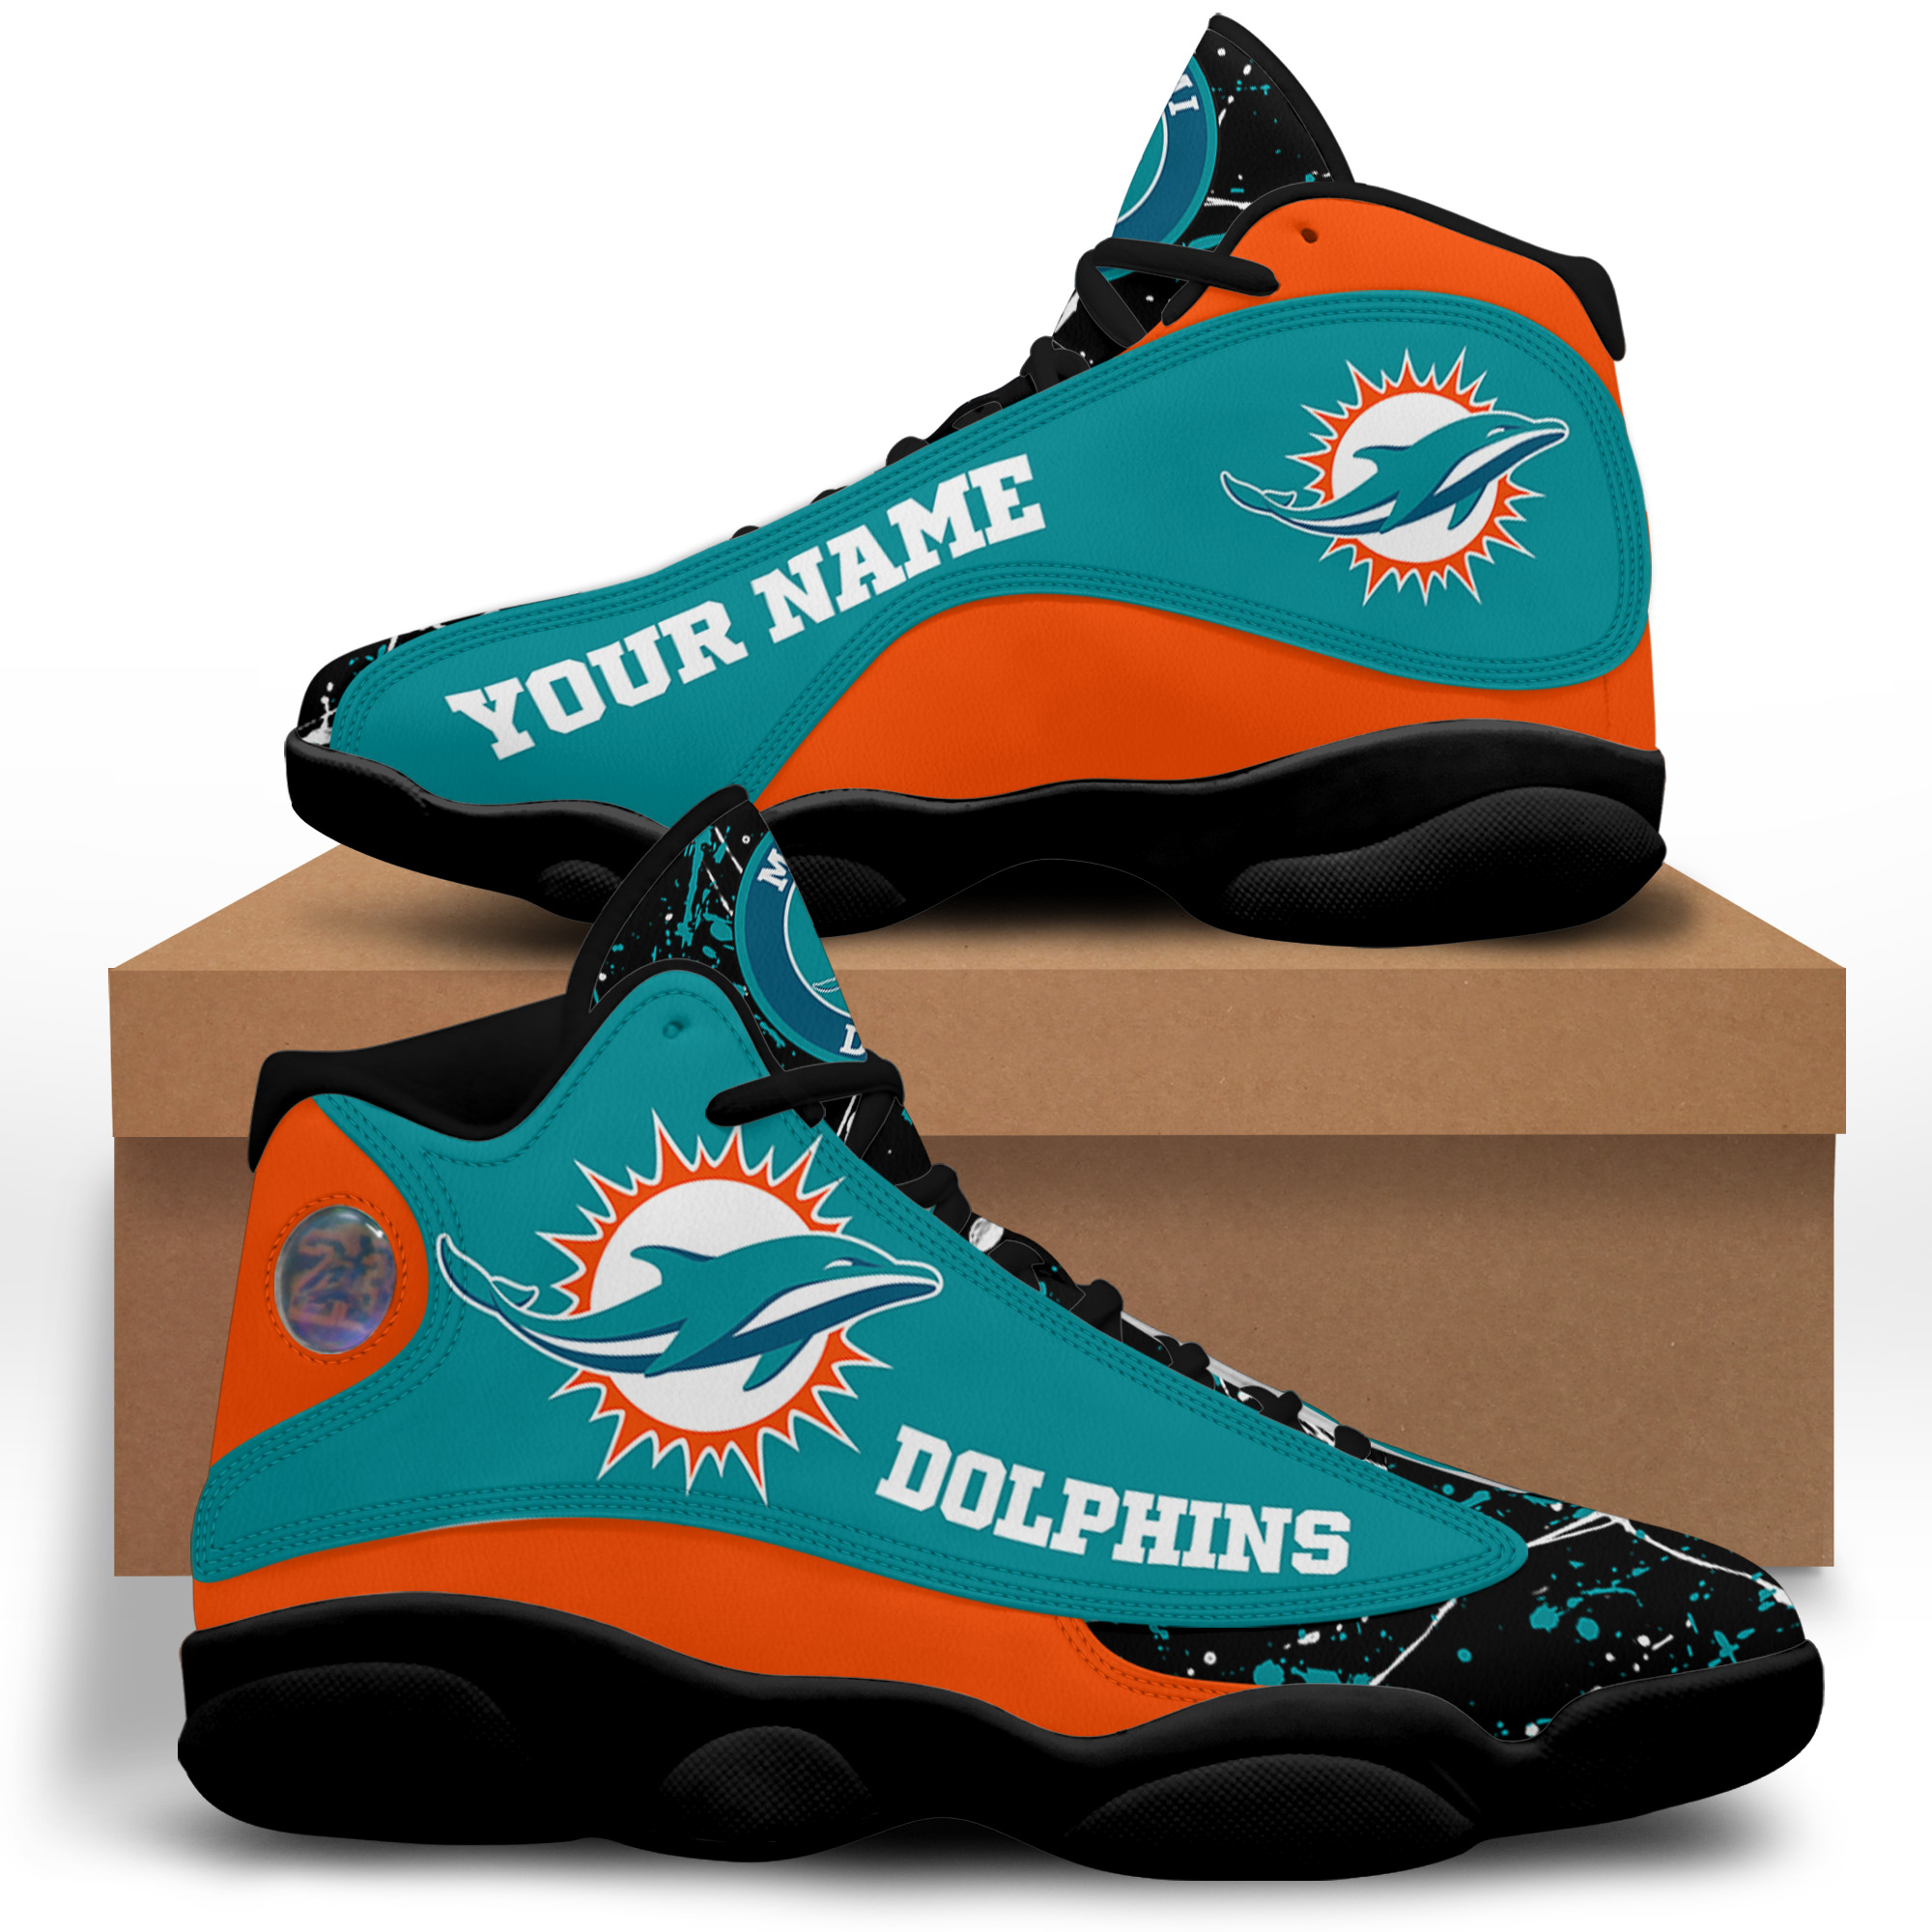 NFL Personalized Your Name Miami Dolphins Air Jordan 13 Shoes style: Women's Air Jordan 13, color: Black